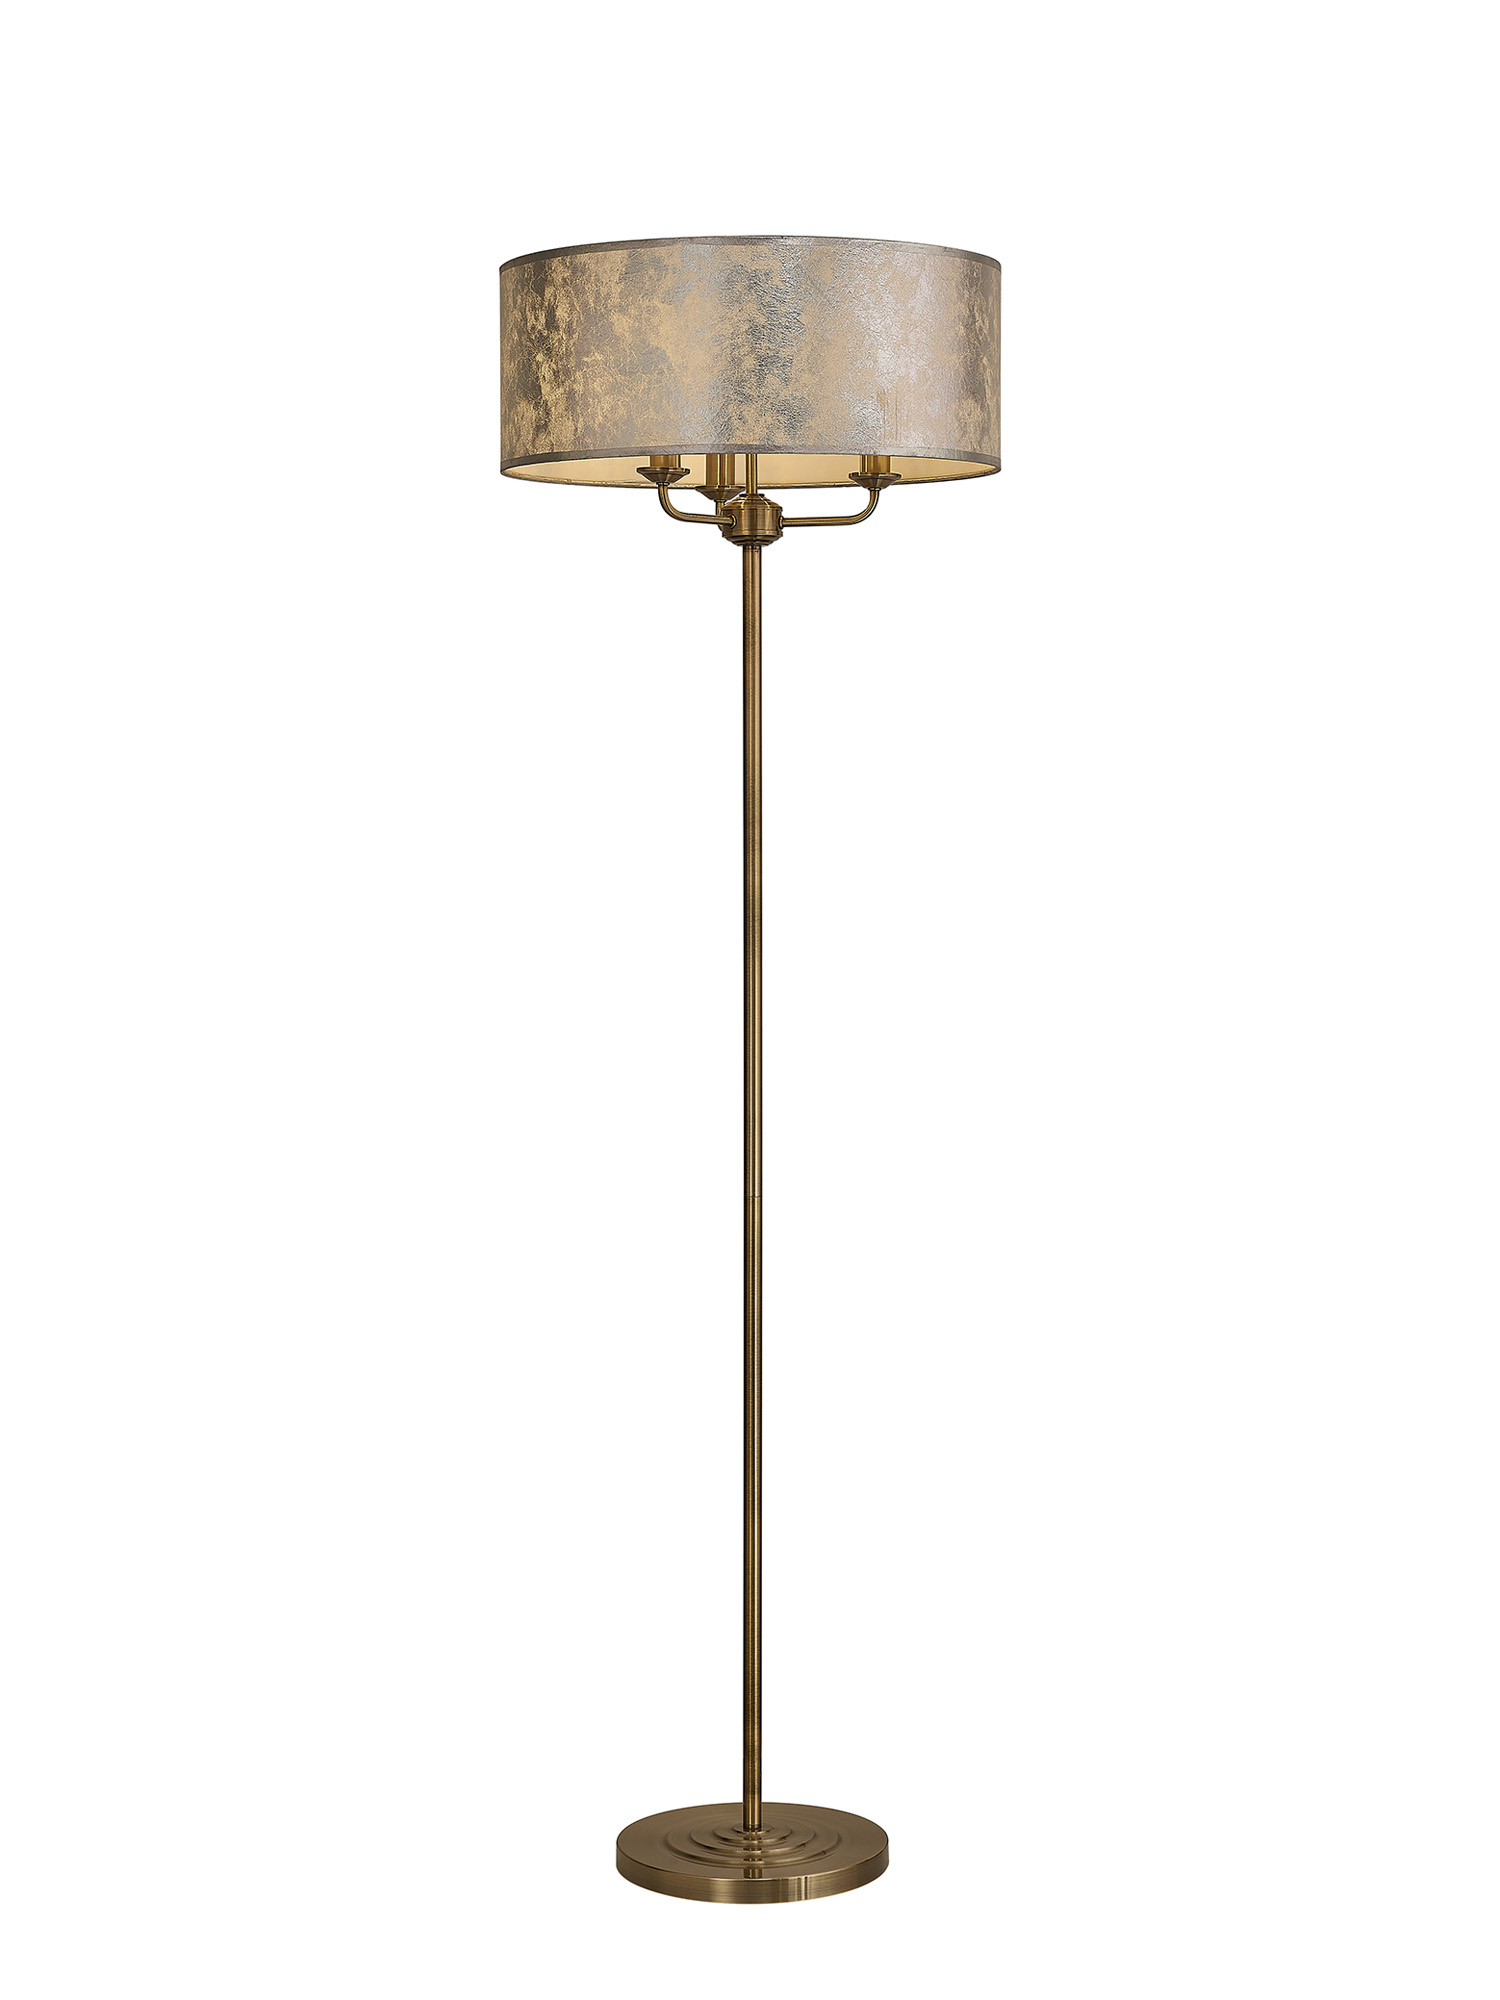 DK0920  Banyan 45cm 3 Light Floor Lamp Antique Brass; Silver Leaf